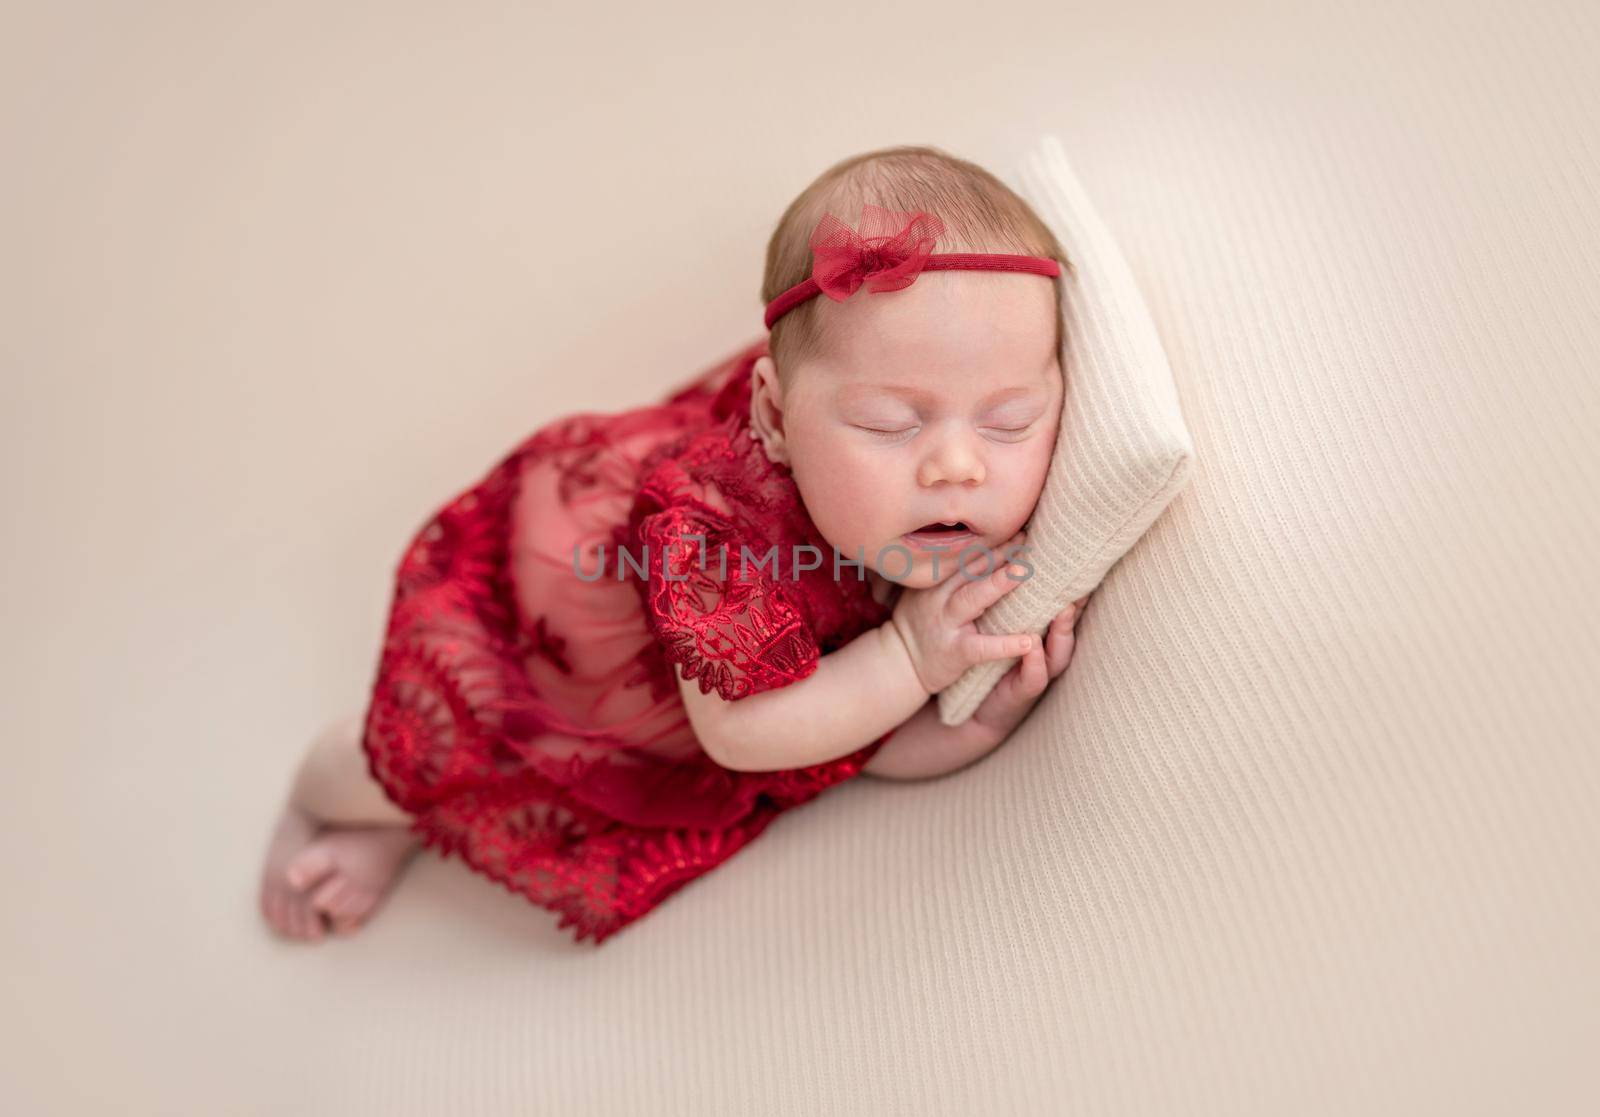 Cute newborn in red outfit by tan4ikk1